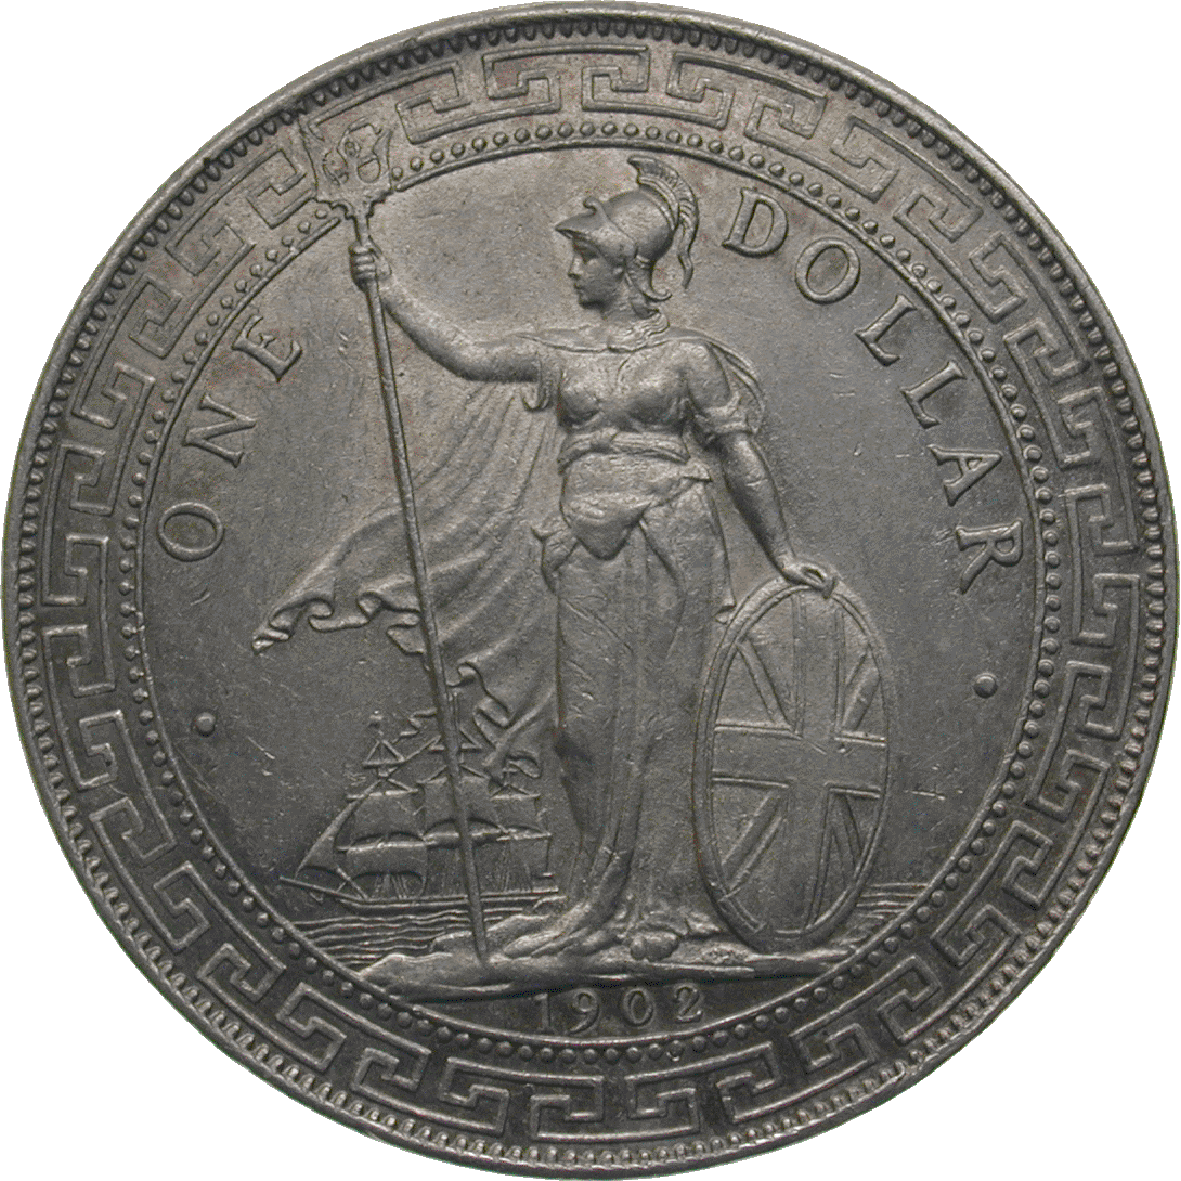 United Kingdom of Great Britain, Edward VII, Trade Dollar 1902 (obverse)